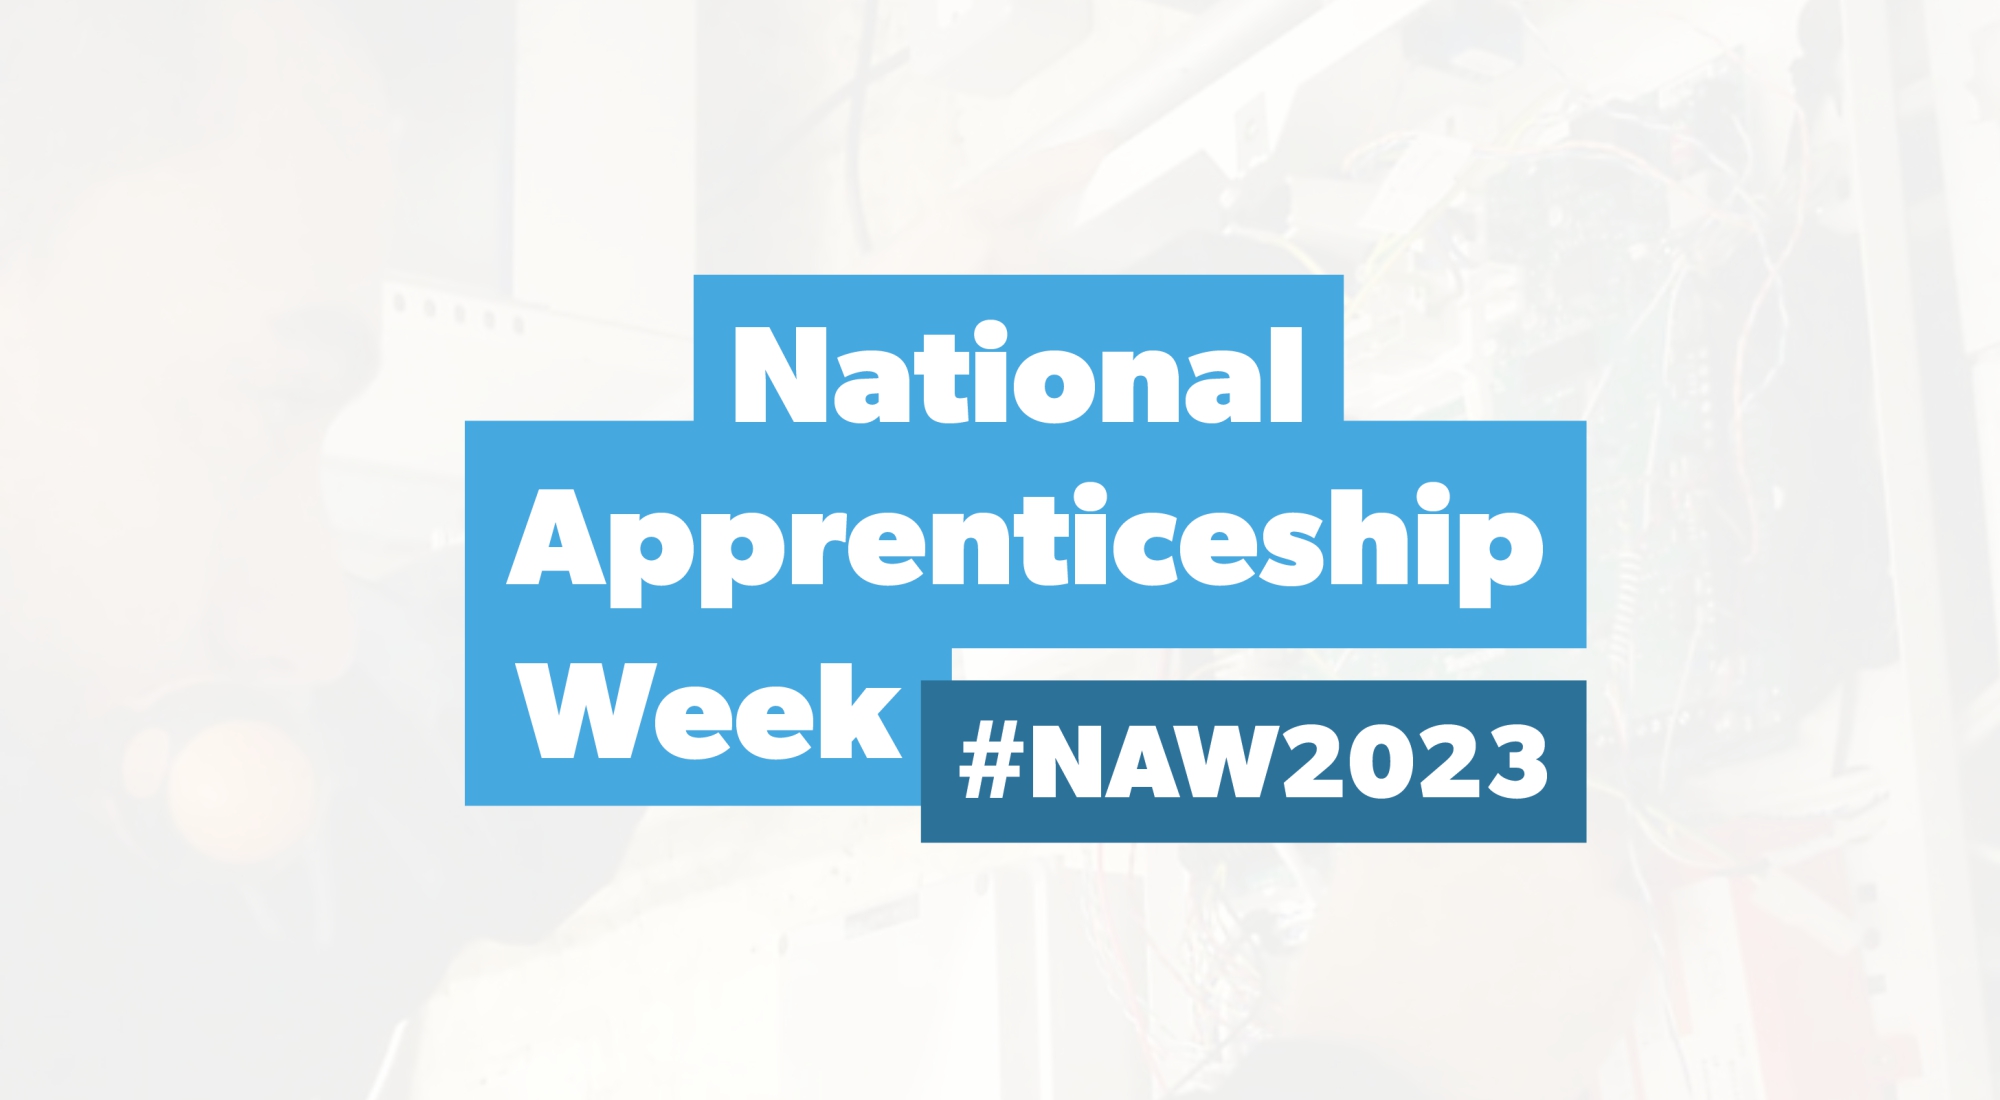 National Apprenticeship Week